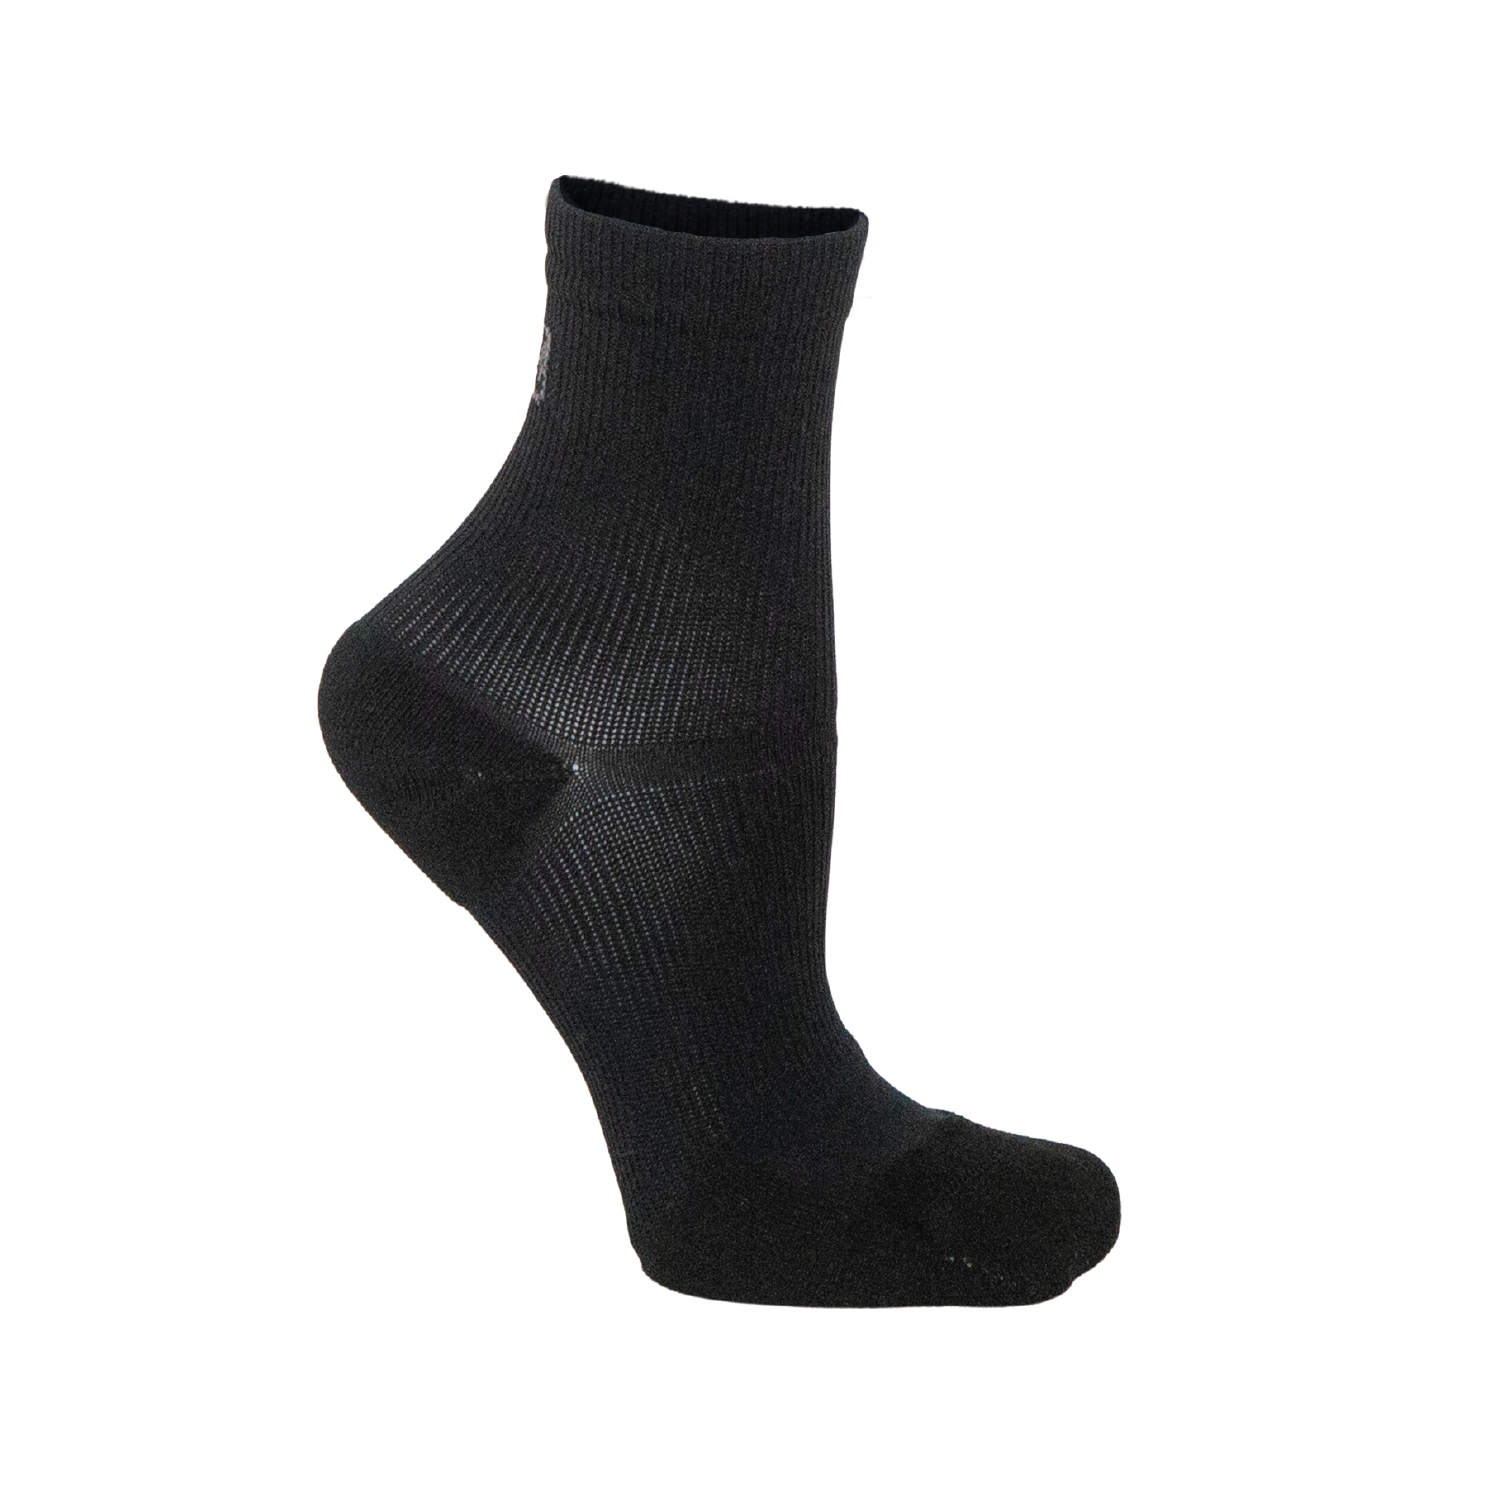 Dance Socks 2 Pack - Black One Size- MENS at  Men's Clothing store